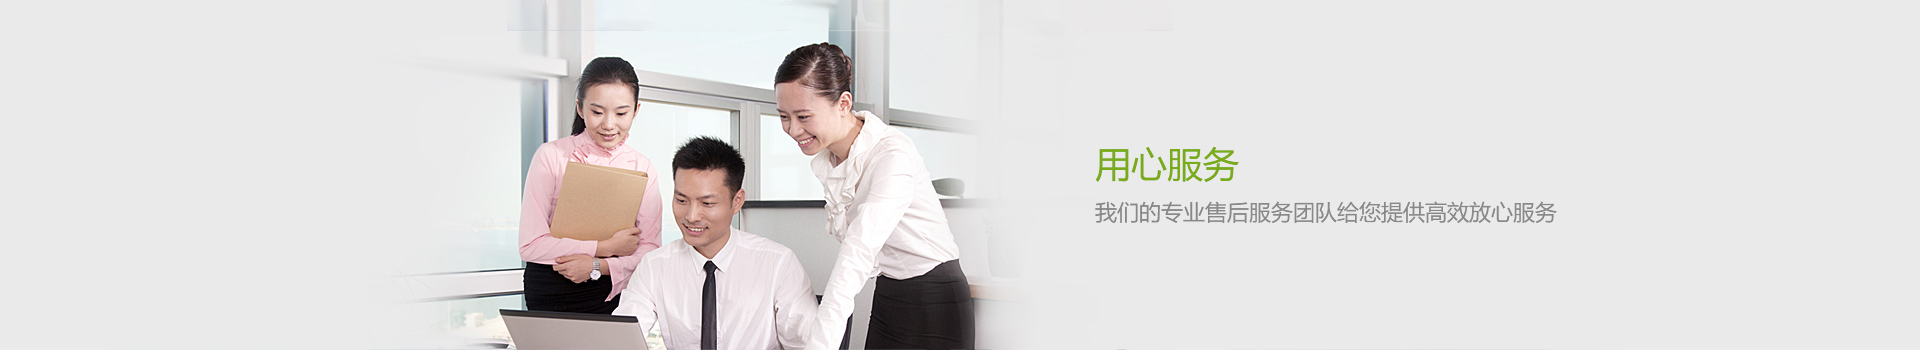 Shenzhen Youkong Laser Technology Co., Ltd